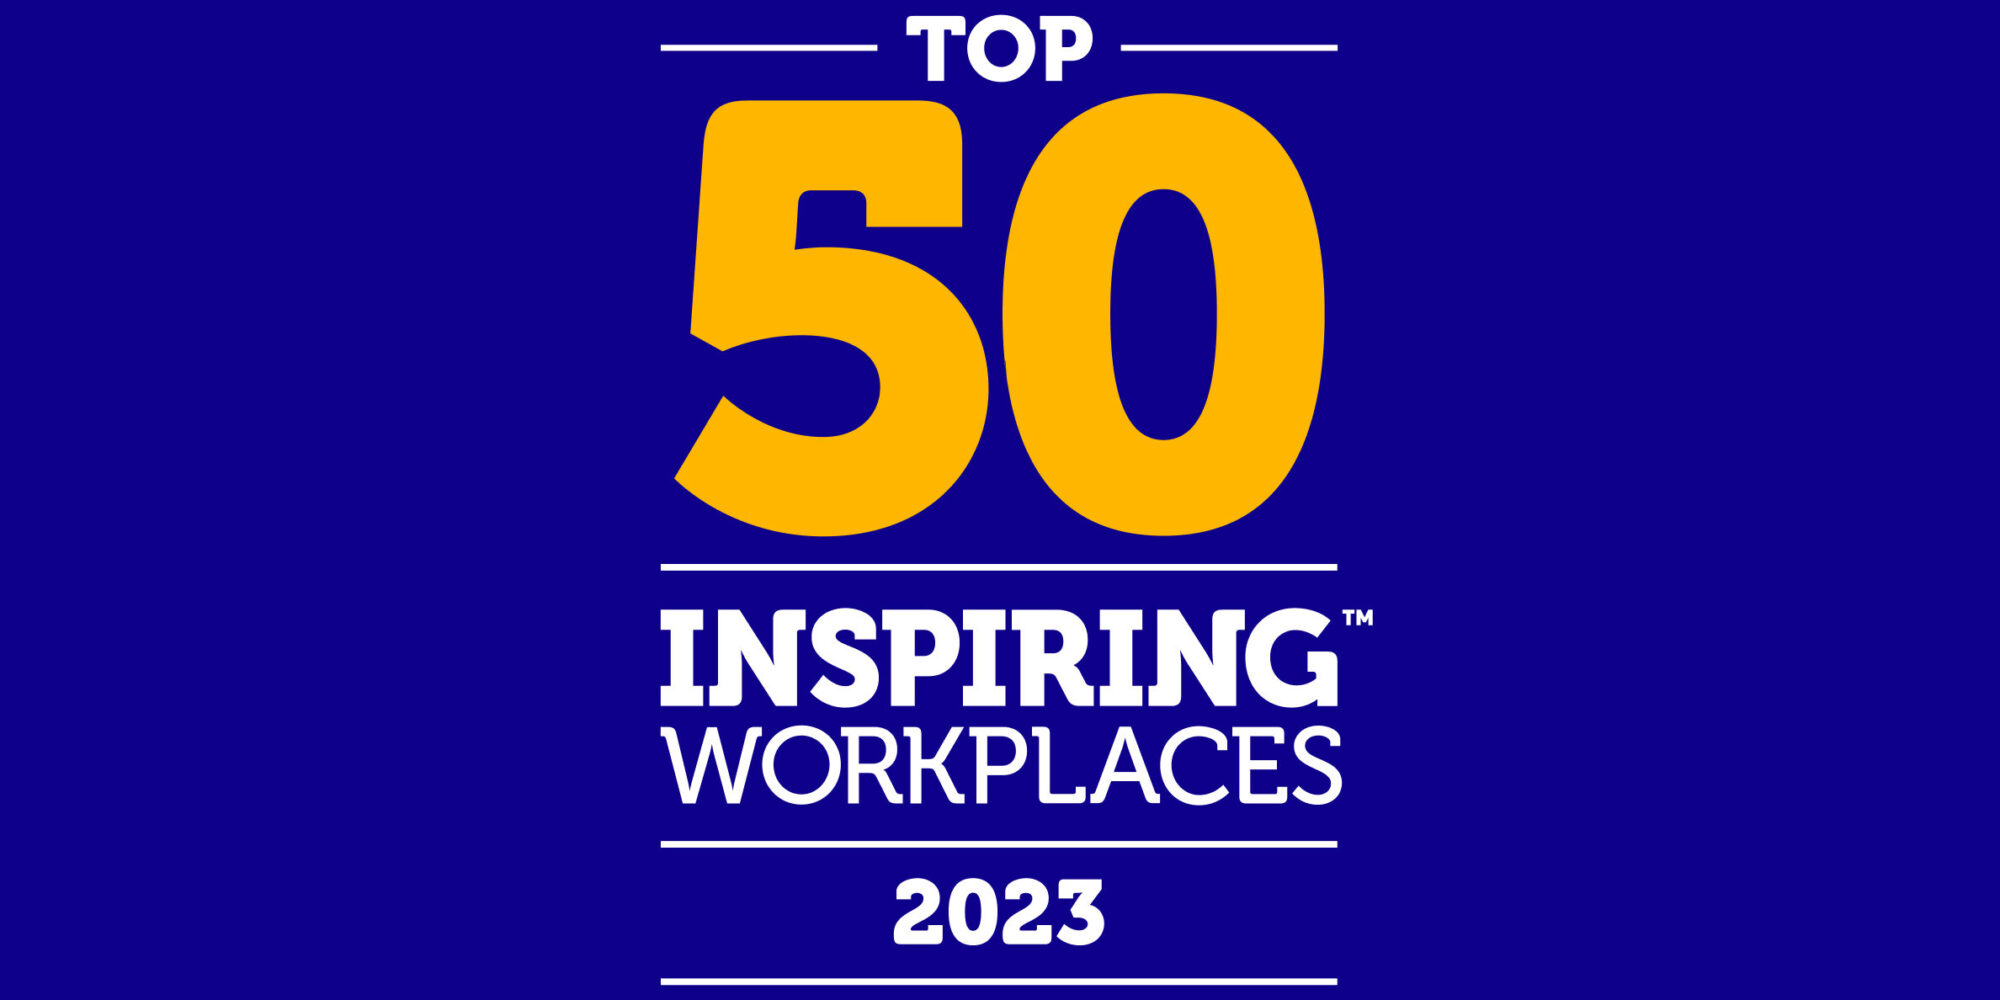 Top 50 Inspiring Workplaces 2023.